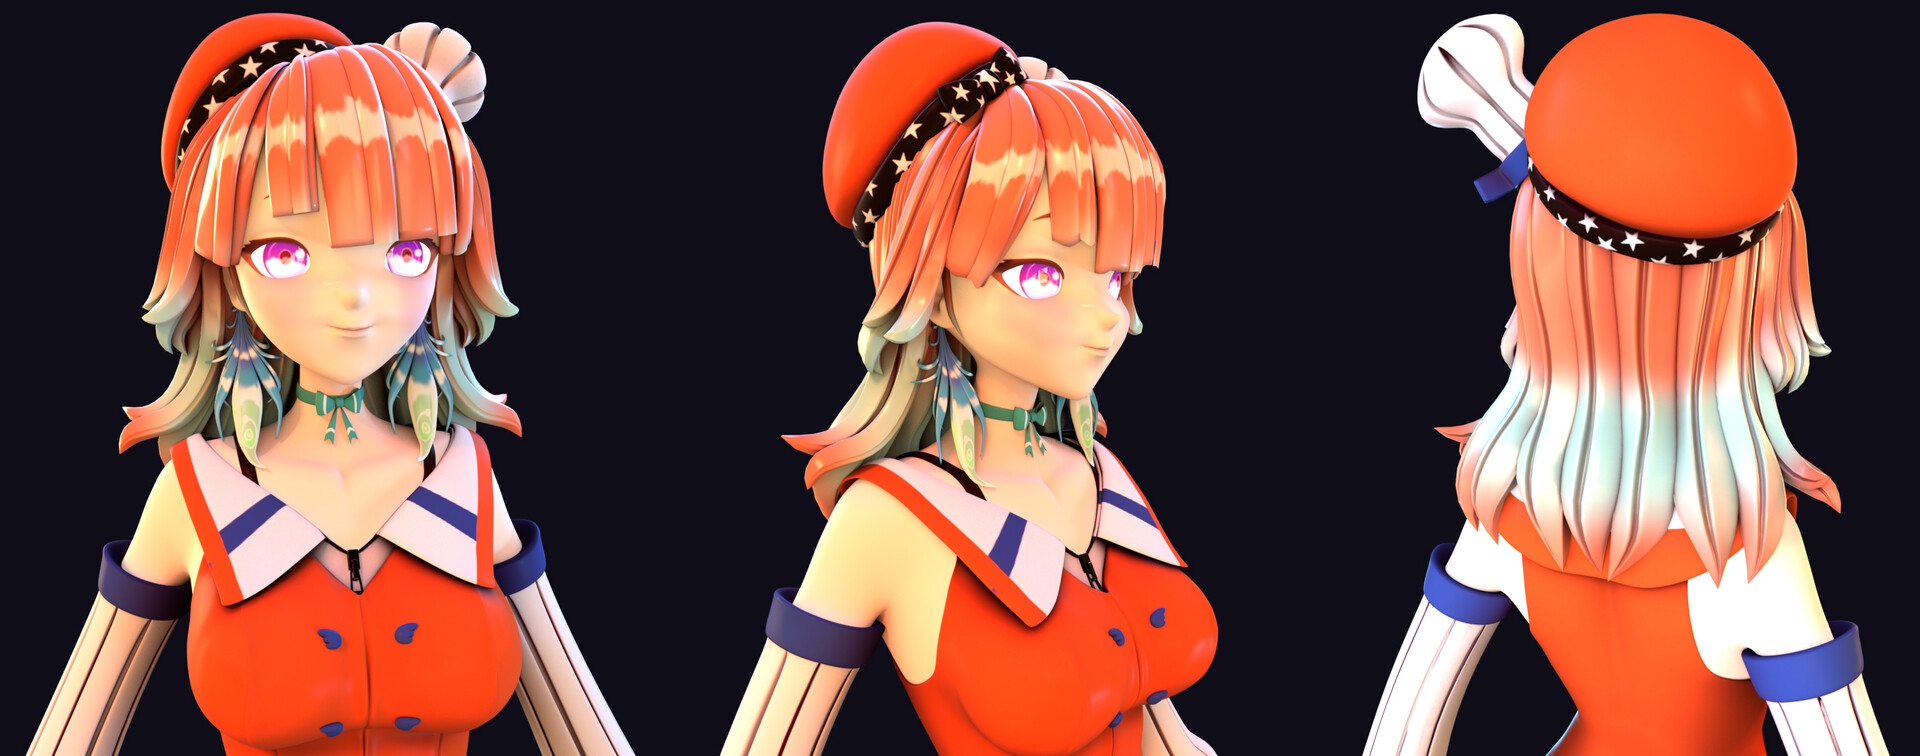 ArtStation - 3D Anime Character Model Commission: Takanashi Kiara / Vtuber  Hololive